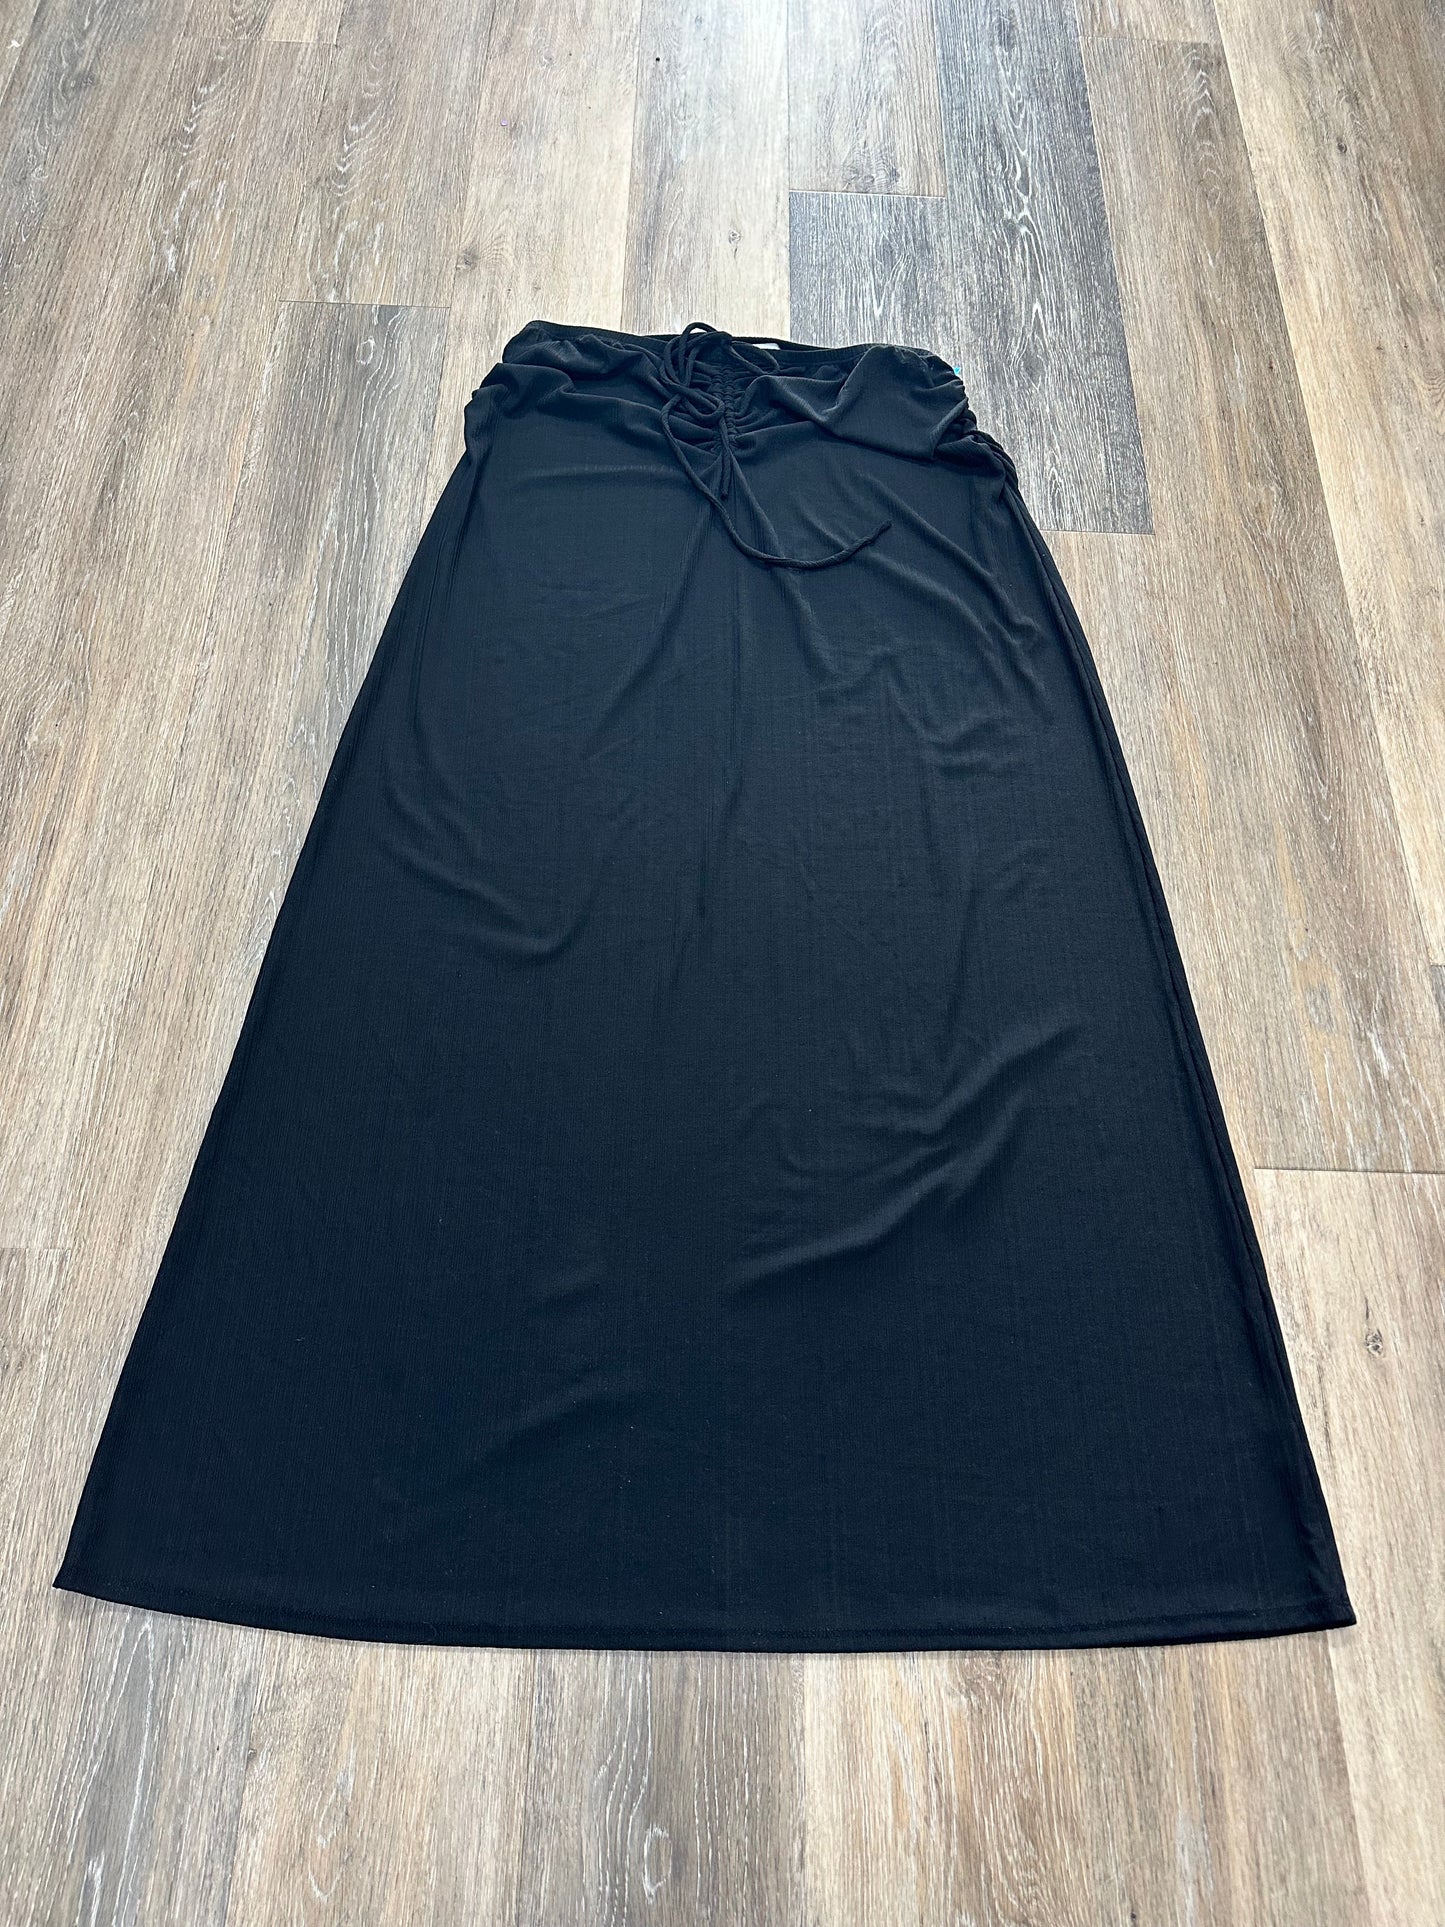 Black Dress Casual Maxi Free People, Size L